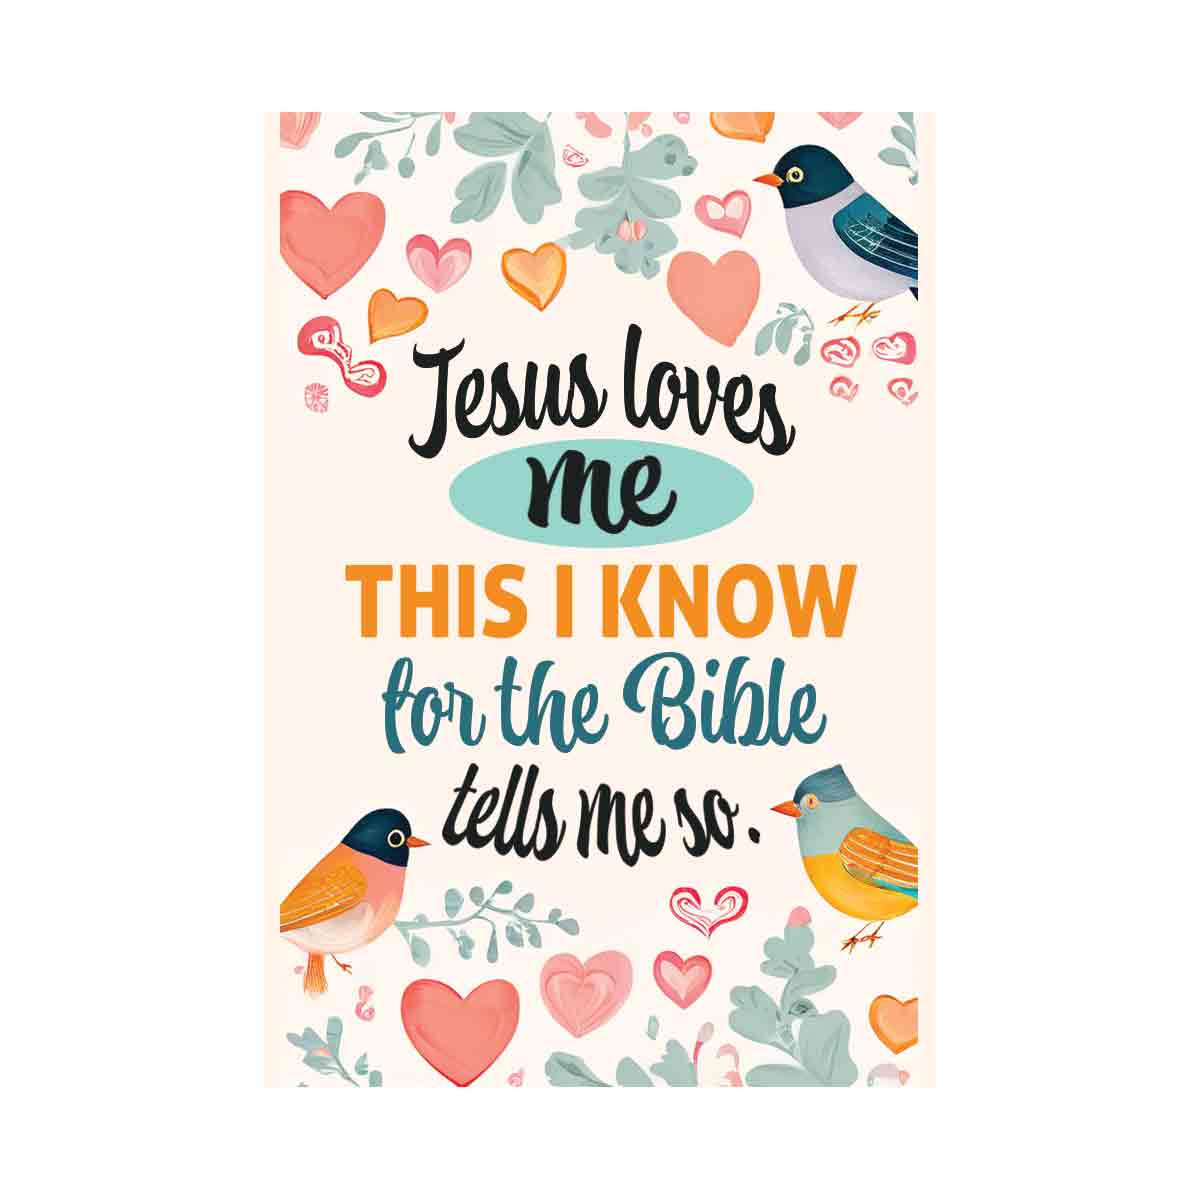 Jesus loves me - for kids